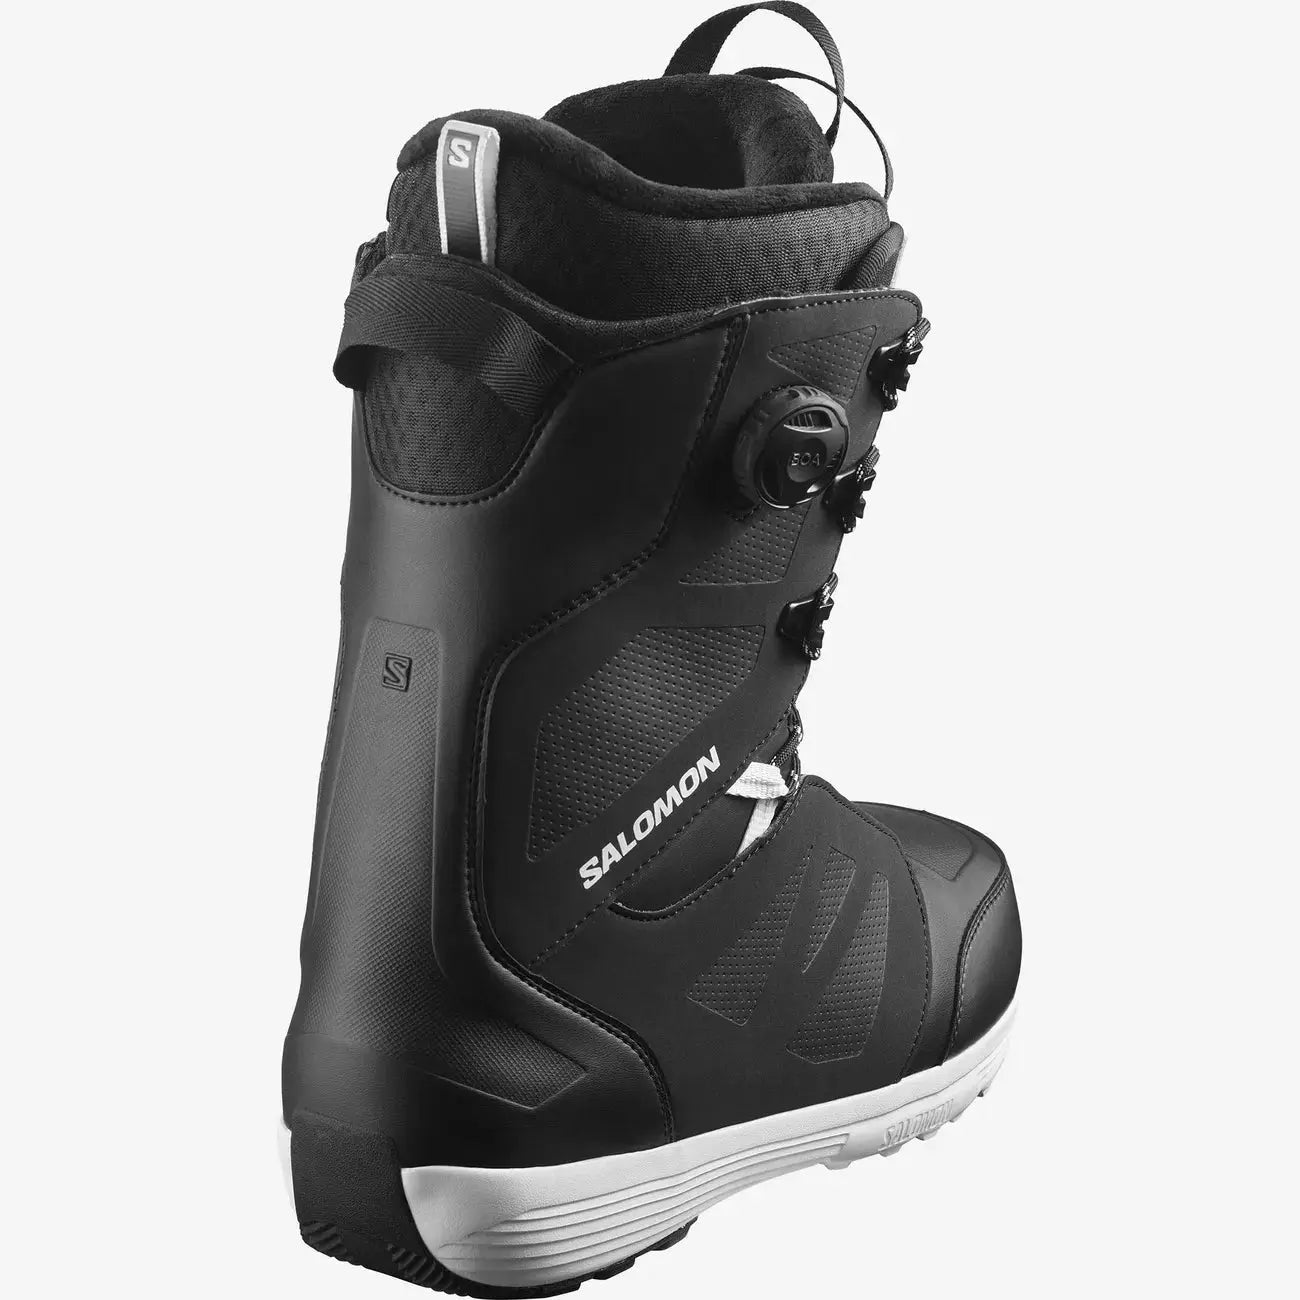 Salomon Launch SJ BOA Snowboard Boots SALOMON